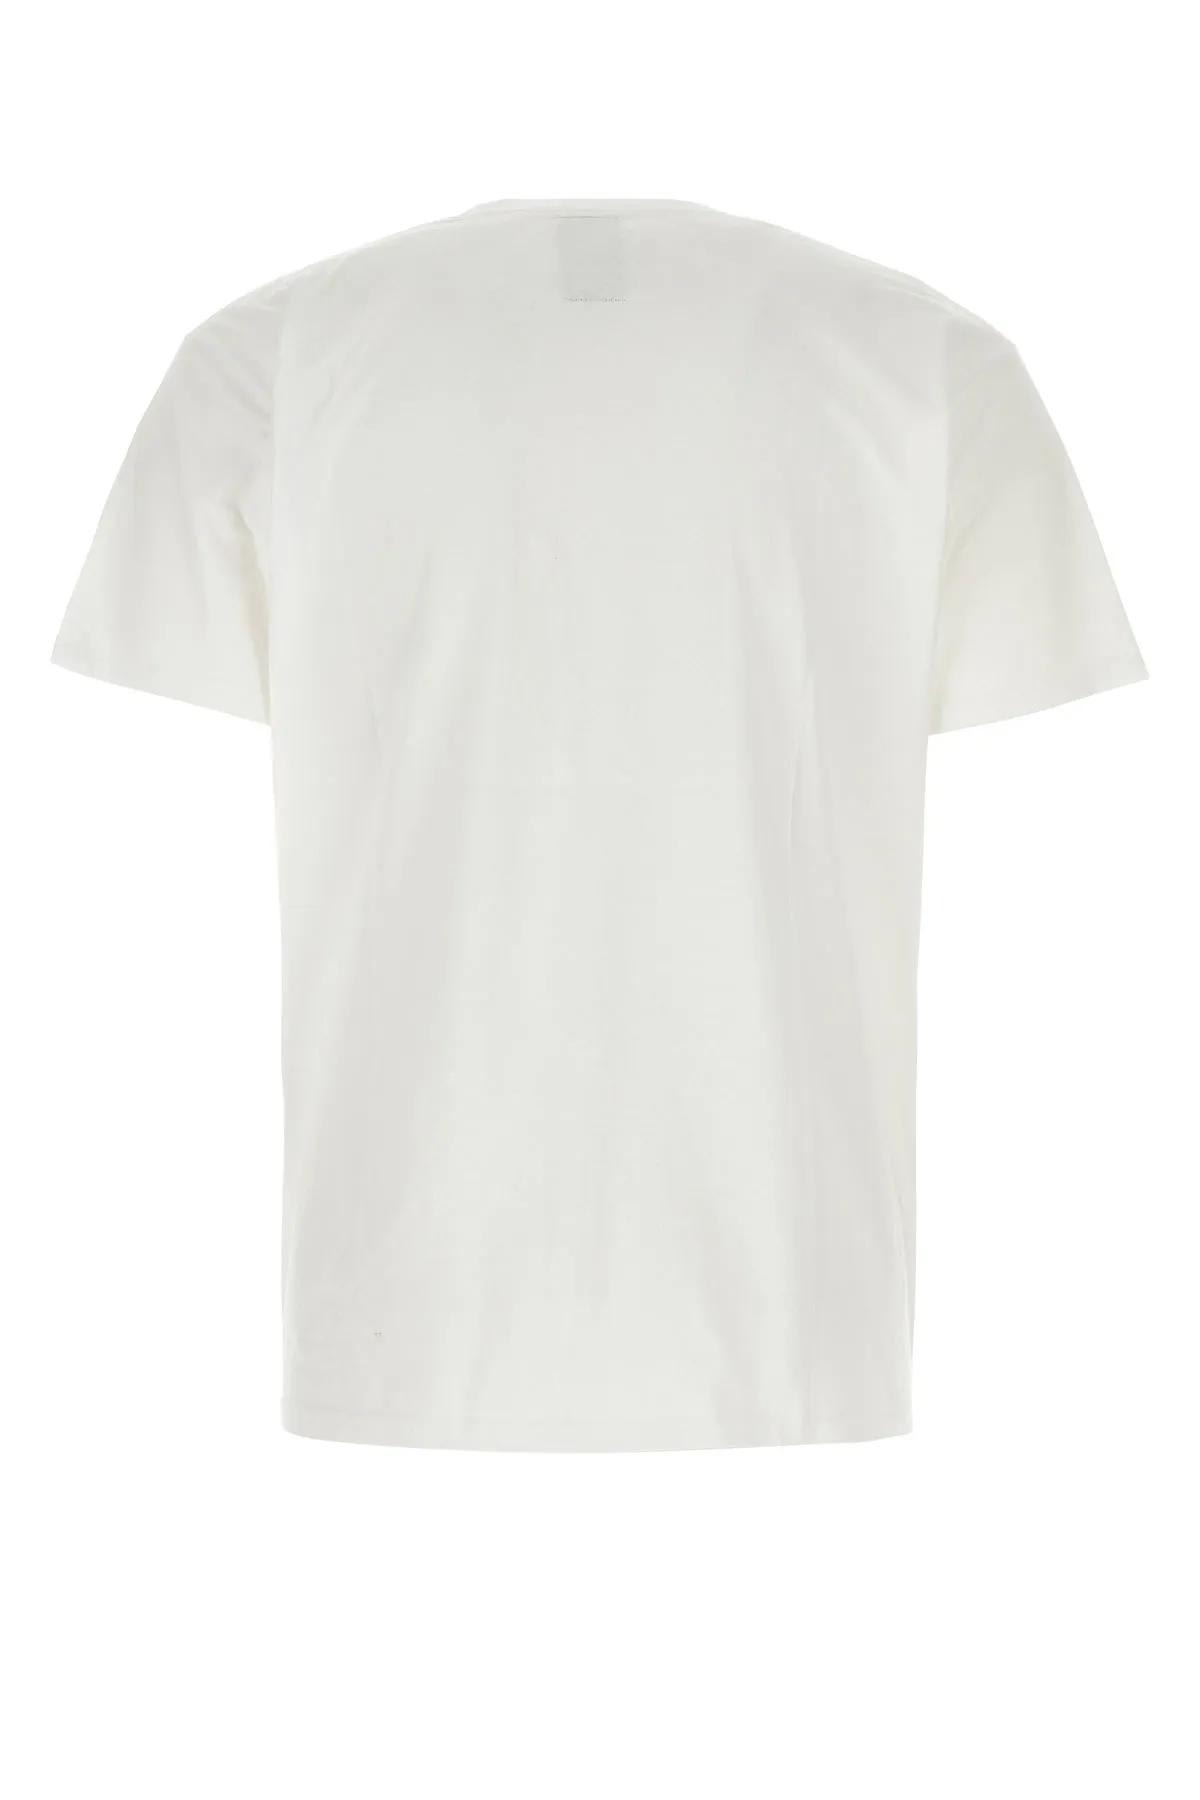 Shop Wild Donkey White Cotton T-shirt